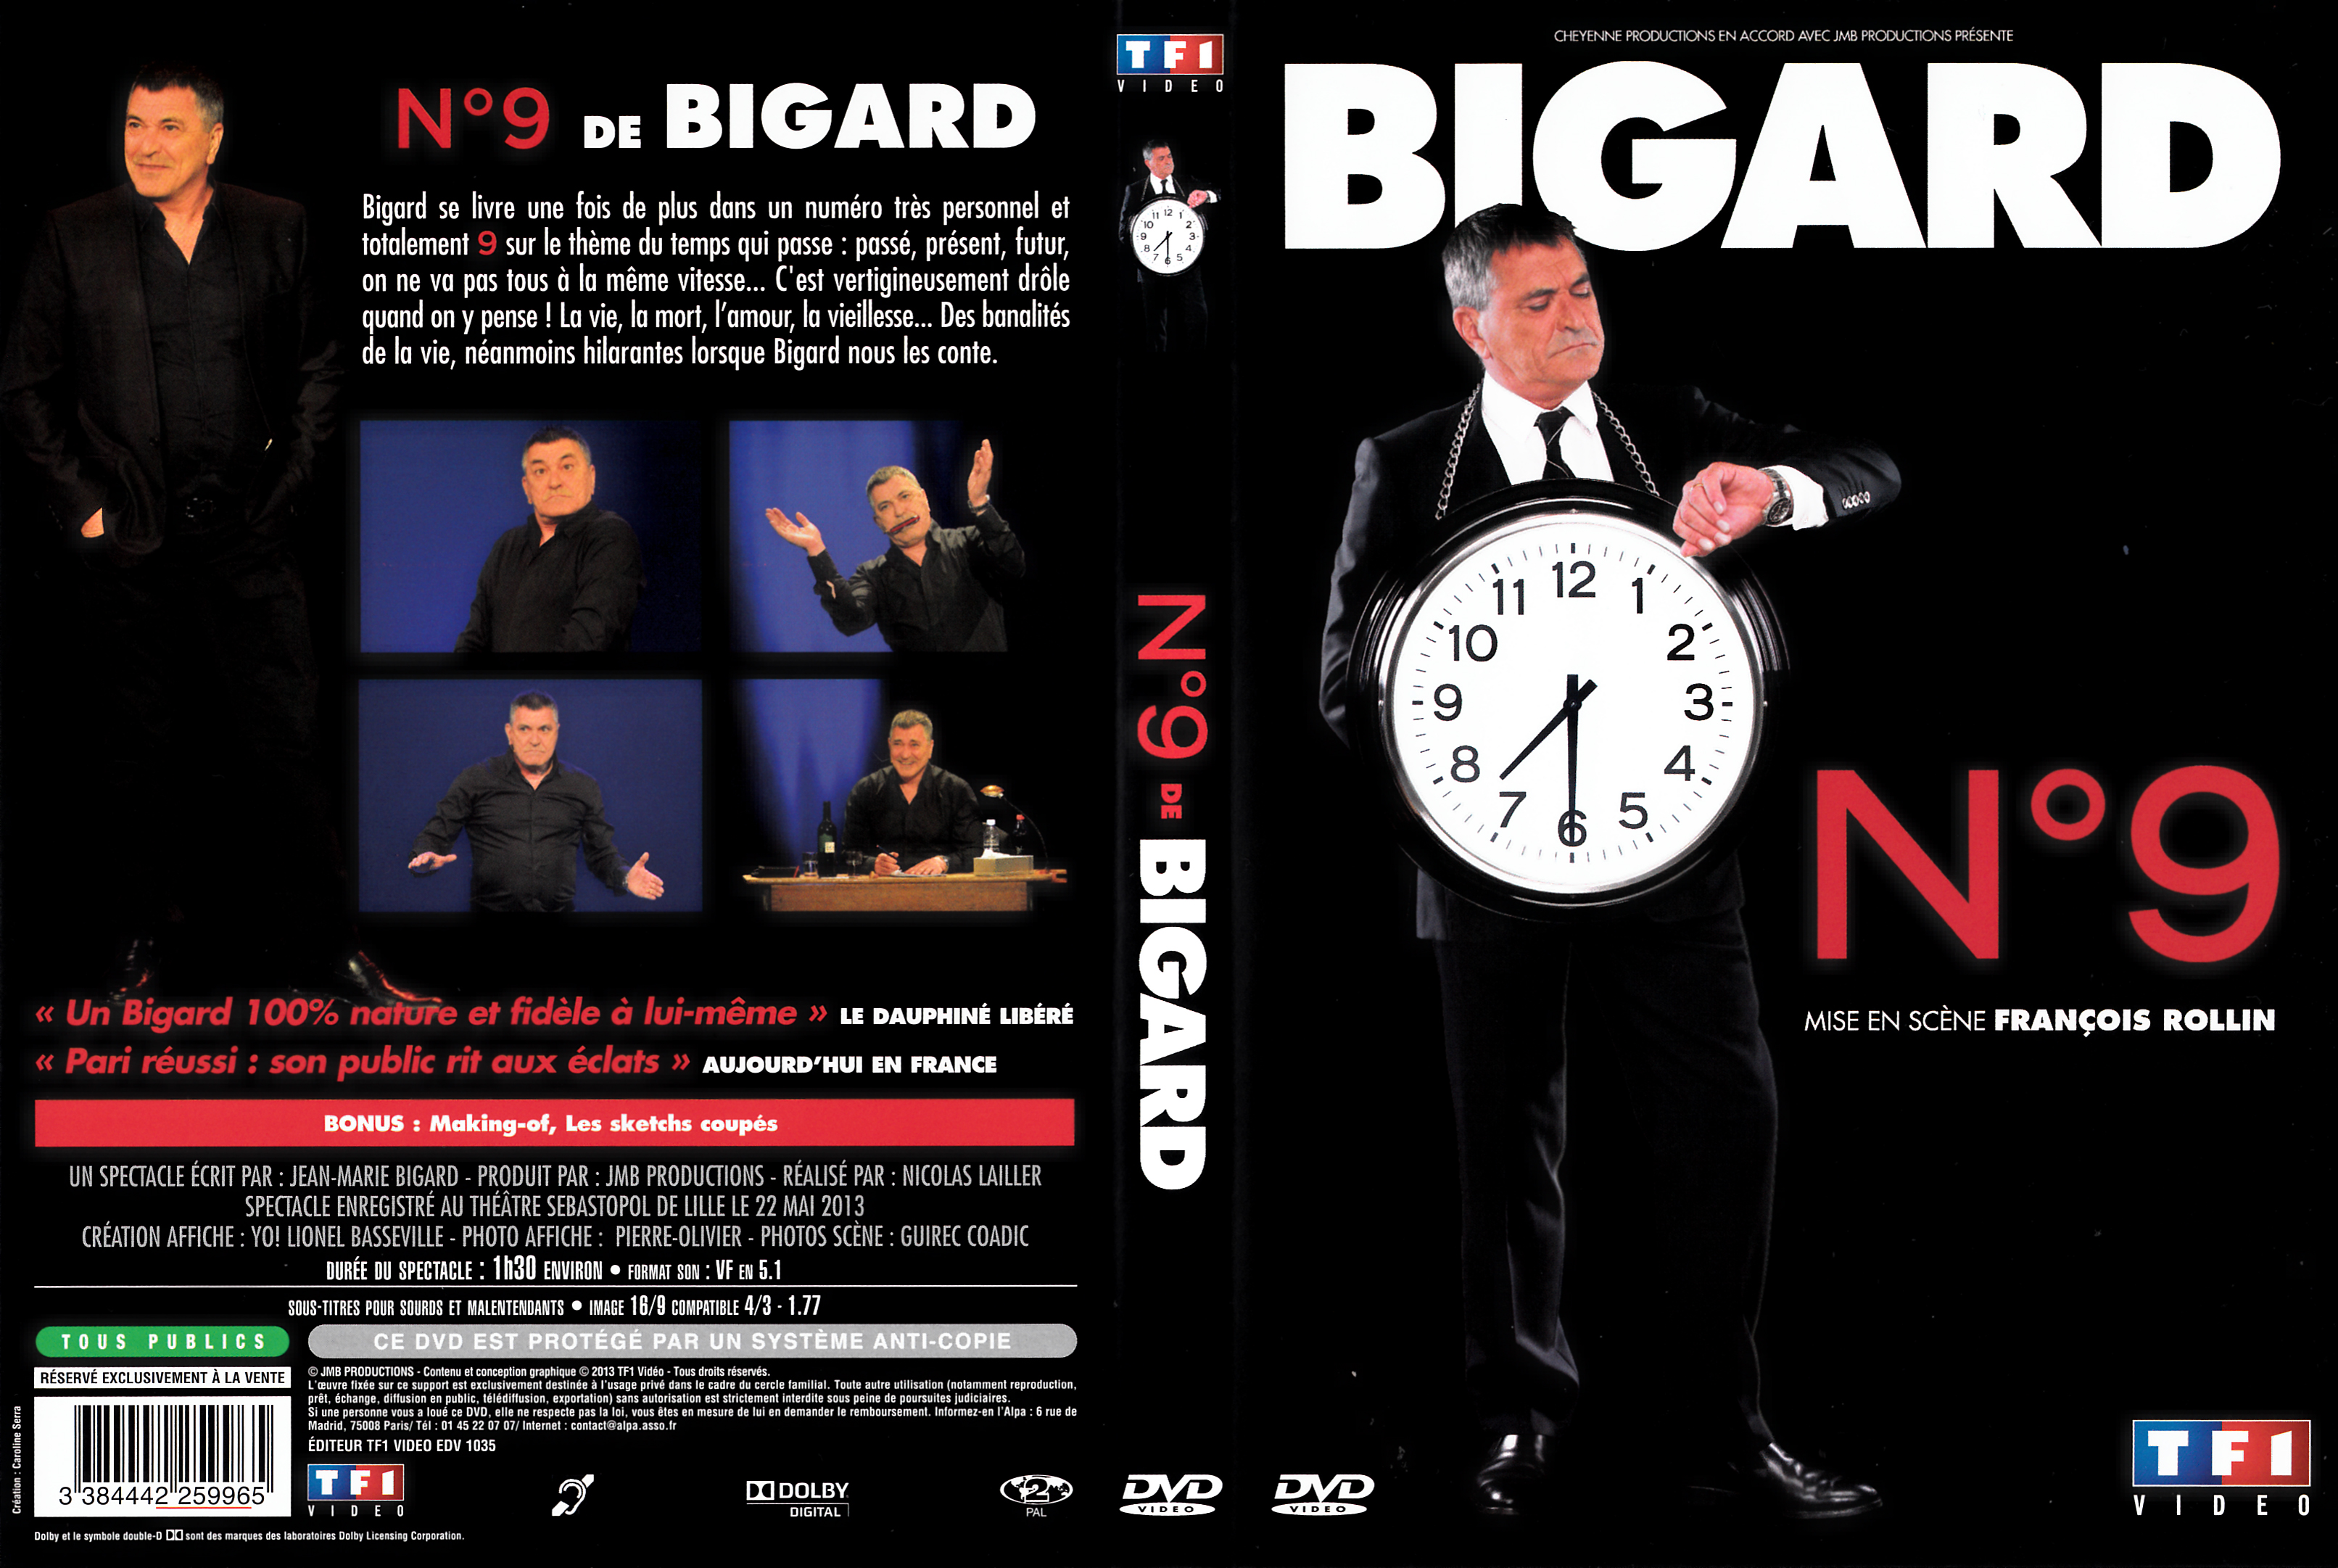 Jaquette DVD Jean-Marie Bigard Numro 9